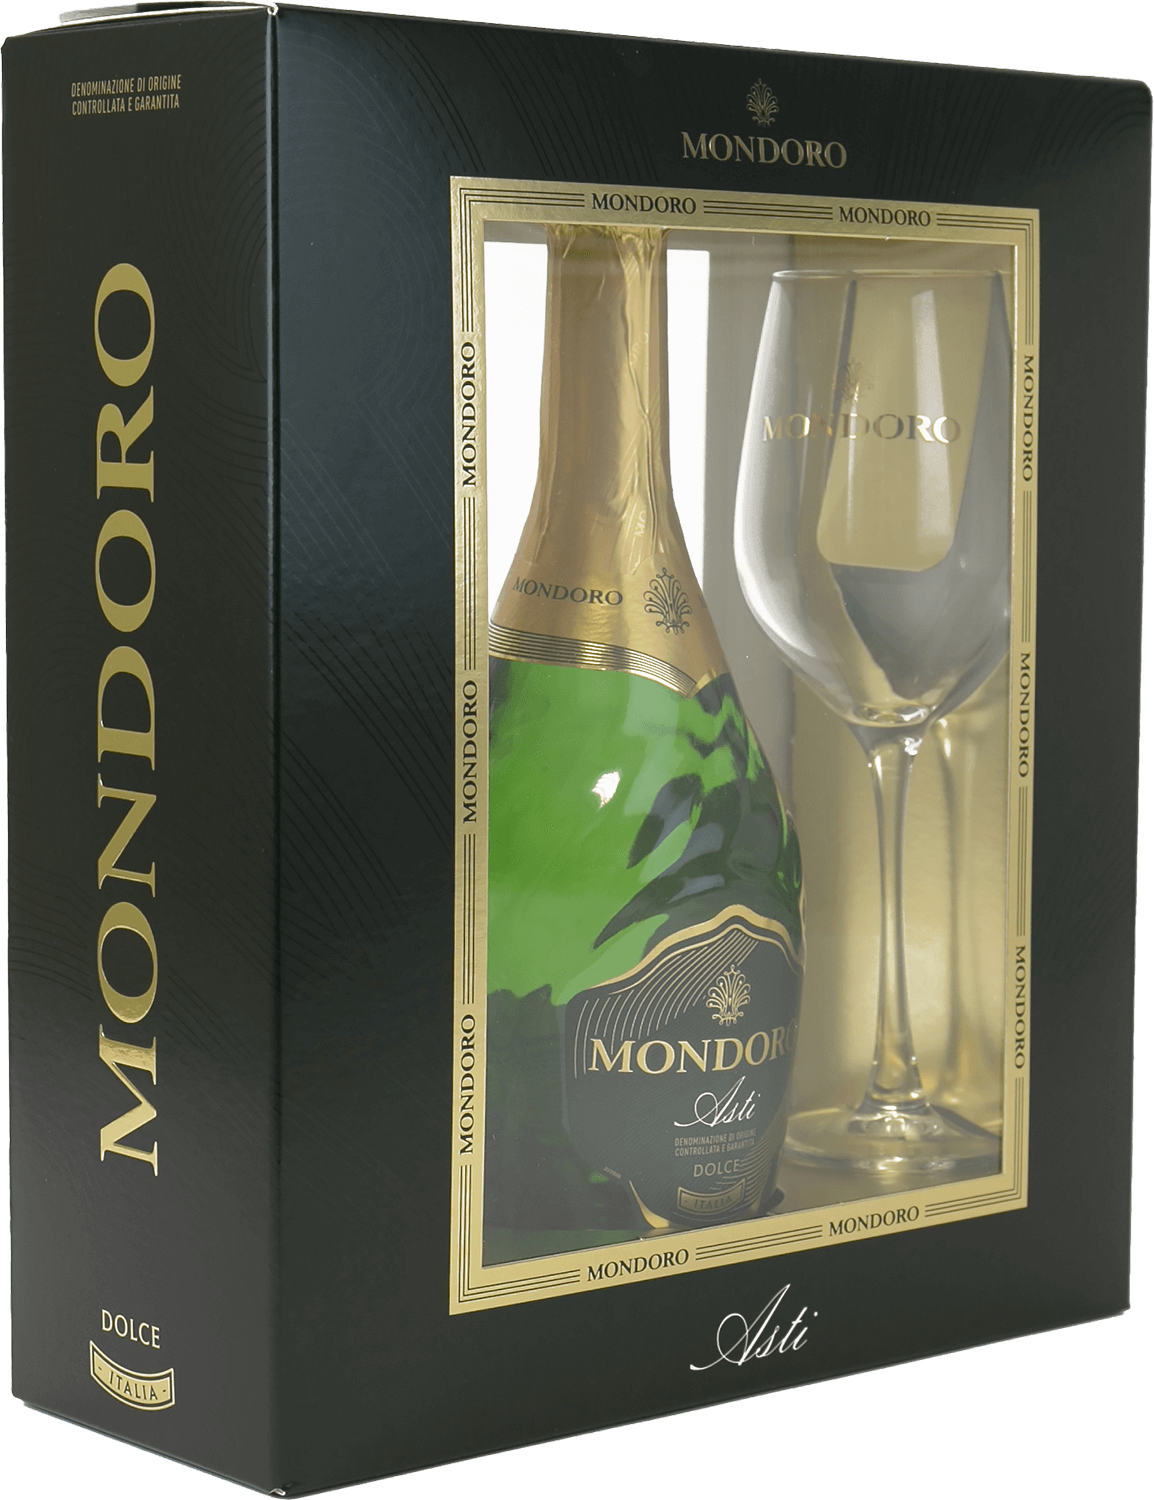 Mondoro Asti DOCG Campari (gift box with 2 glasses)